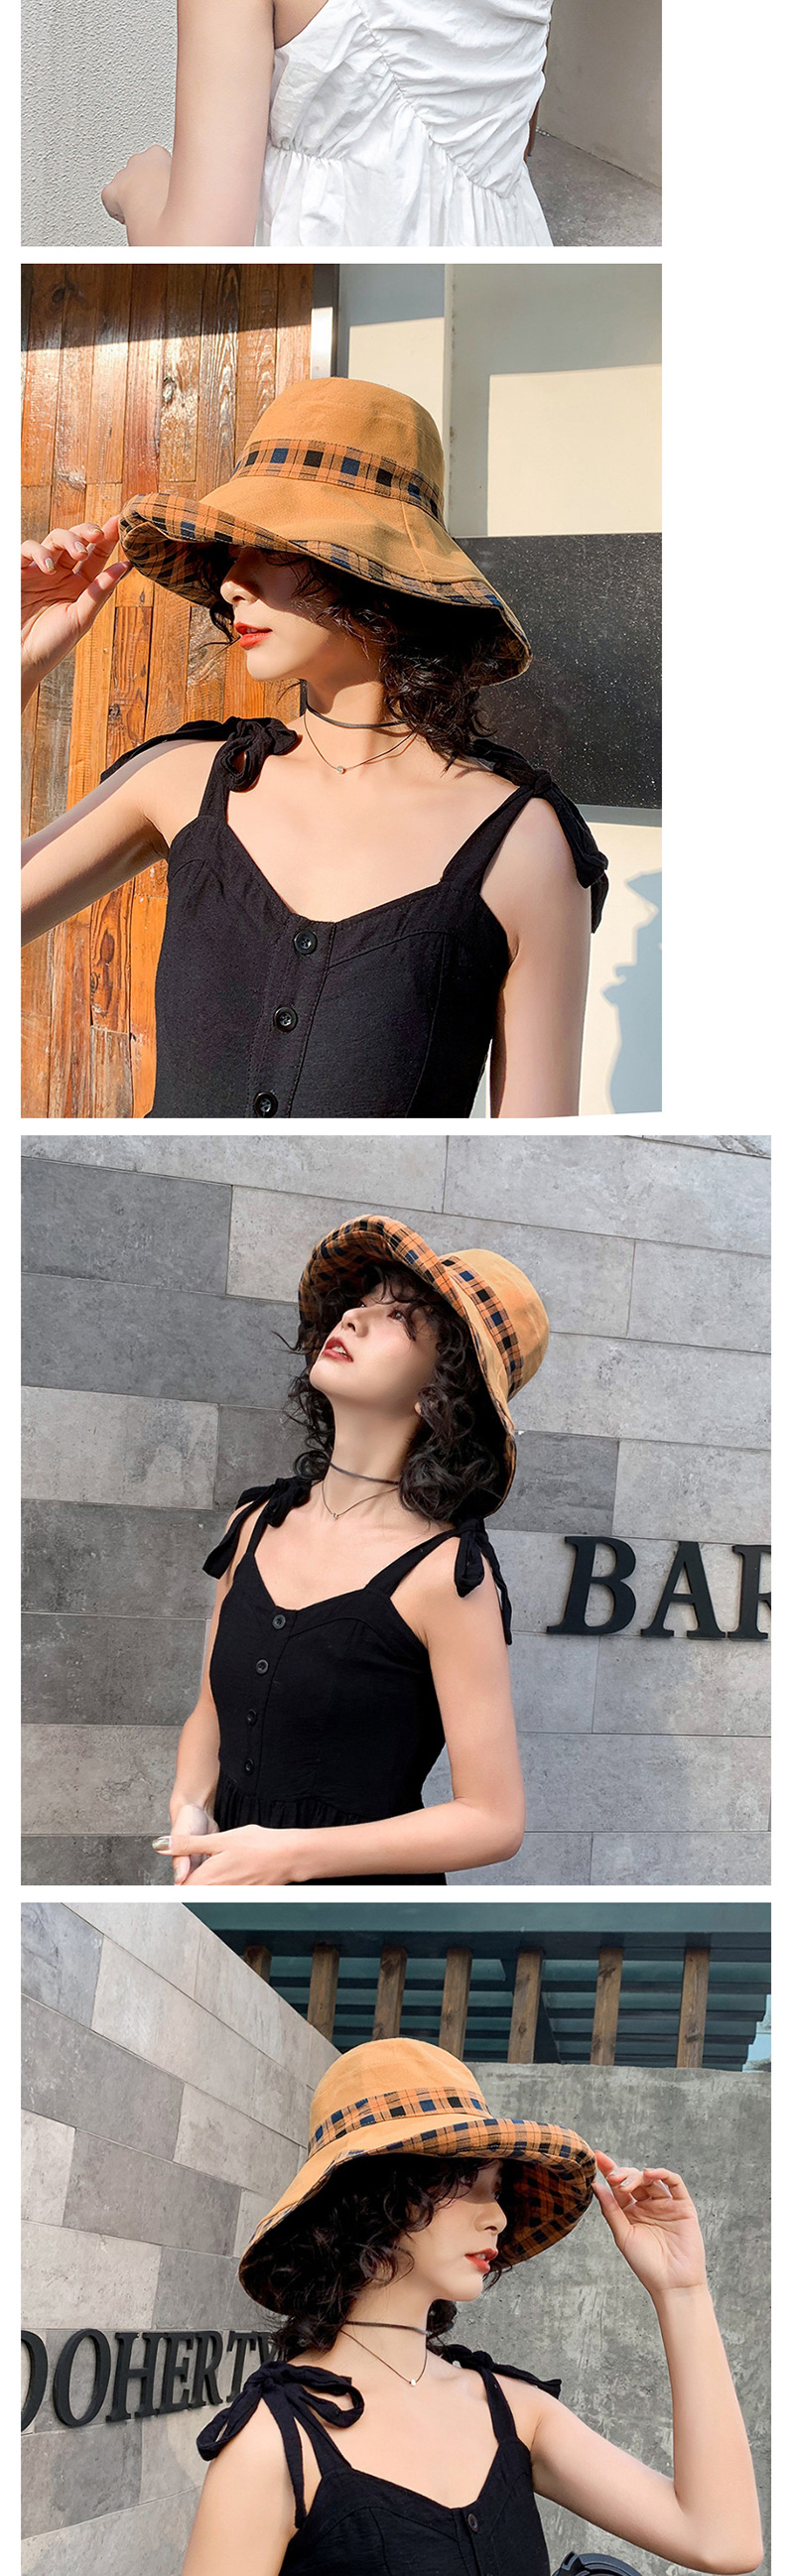 Fashion Black Double-sided Wear Plaid Hat,Sun Hats